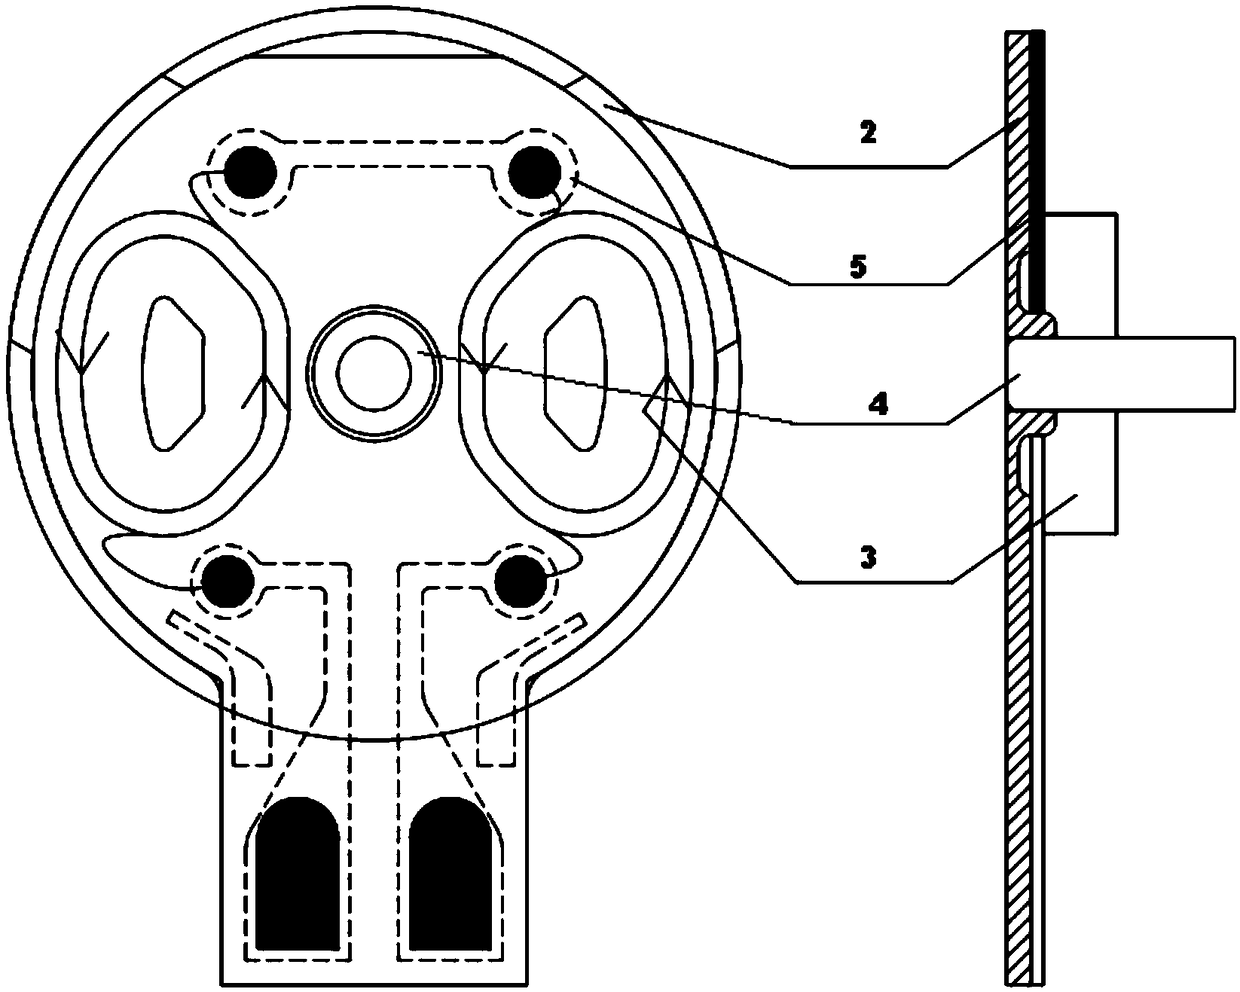 Novel permanent magnet alternating current flat vibration motor and use method thereof